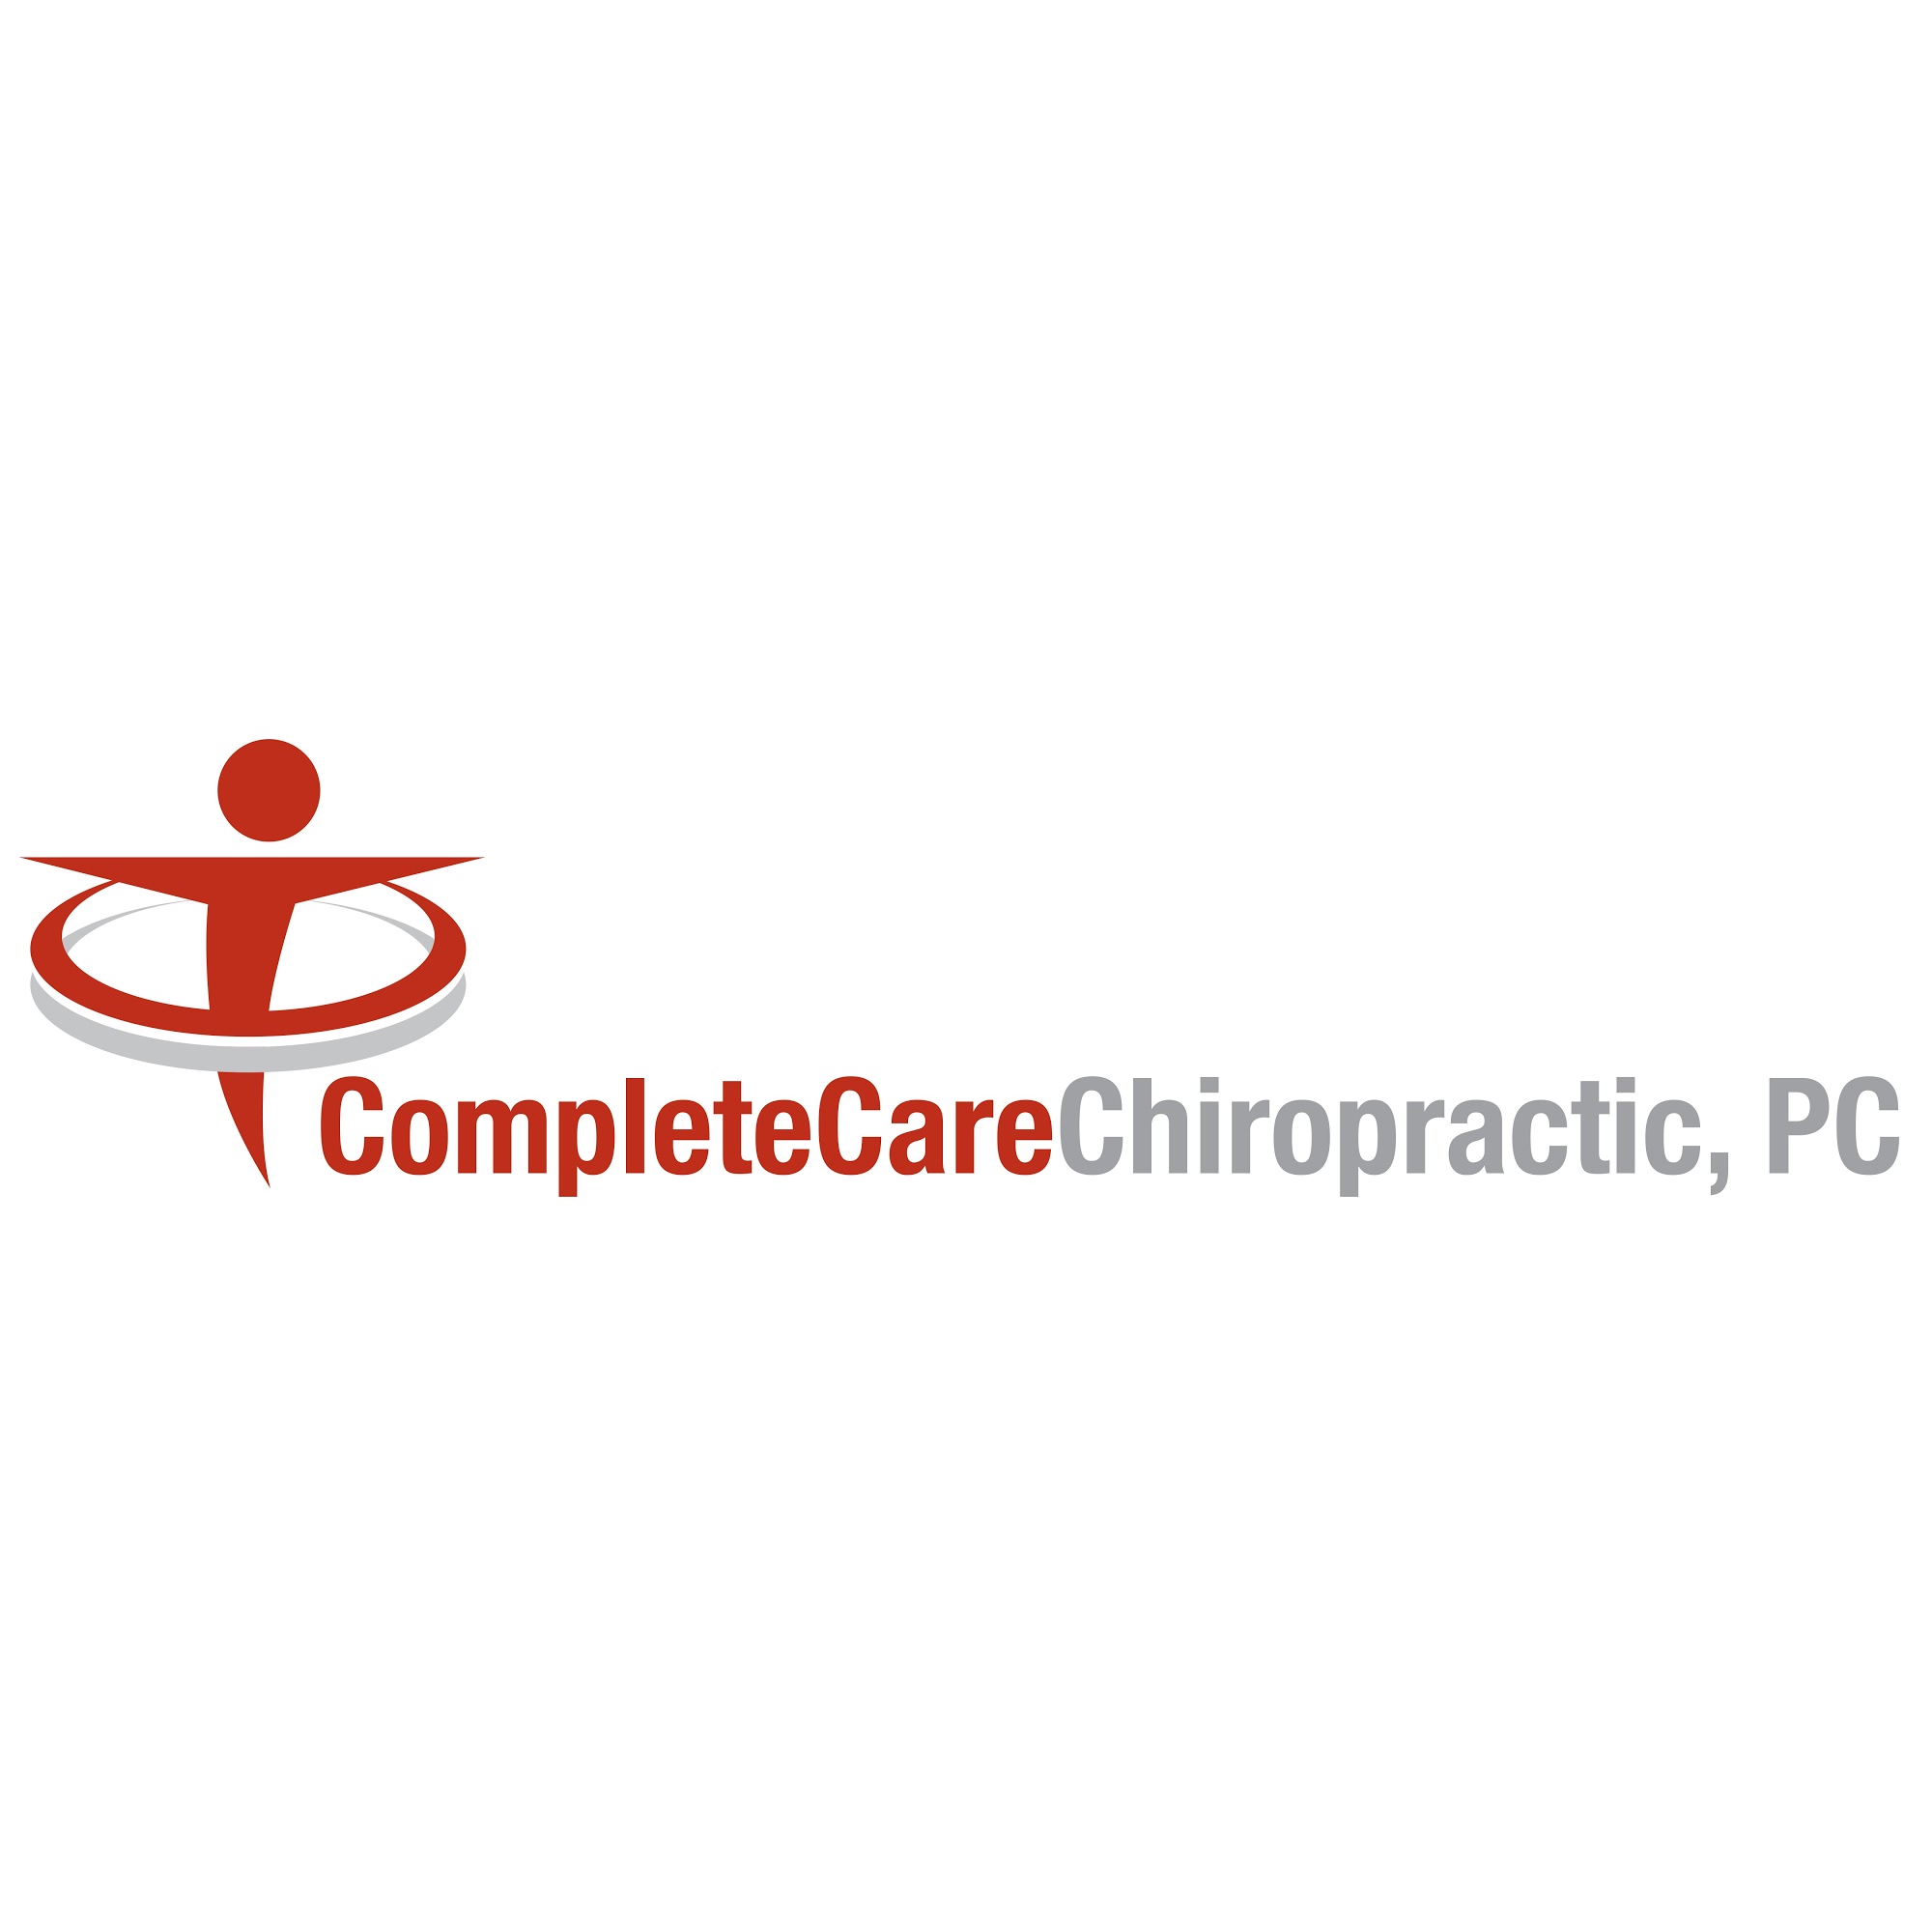 Complete Care Chiropractic, P.C.